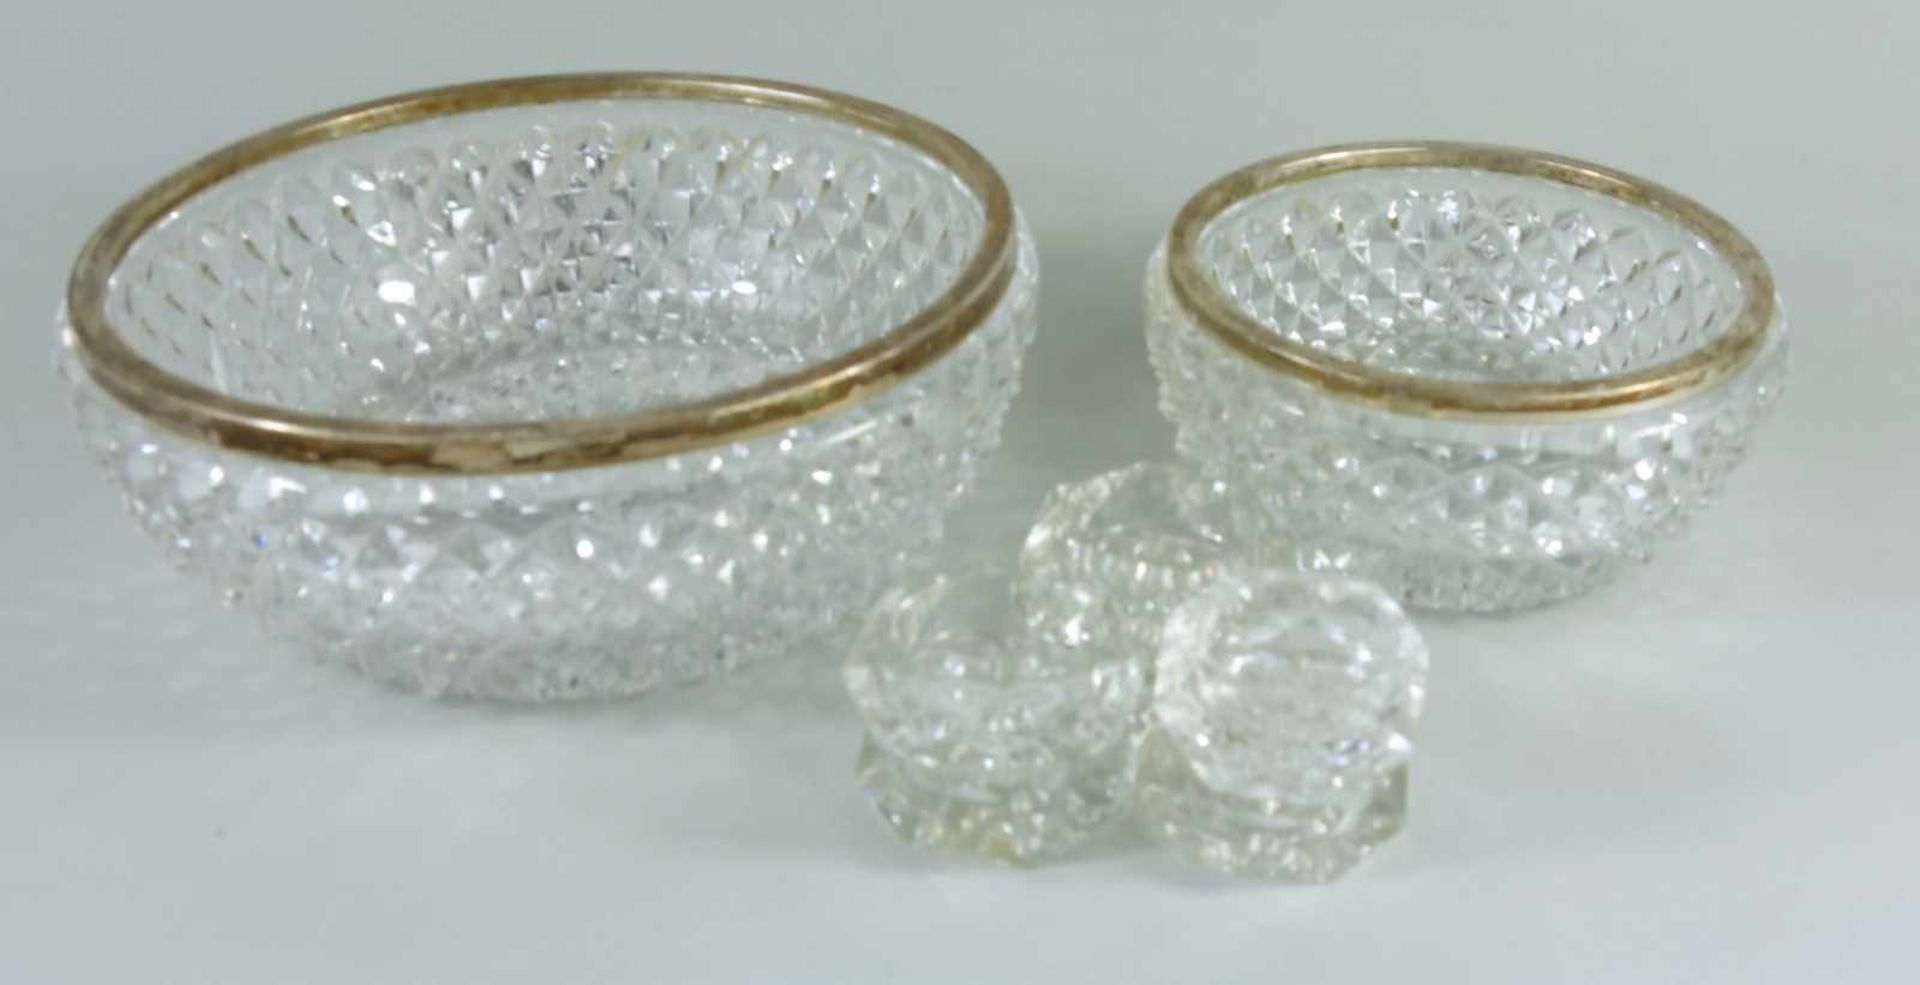 2 Kristallschüsseln mit Silberrand und 6 Salznäpfegest. 925, D.12cm und 17,5cm, Salznäpfe jeweils